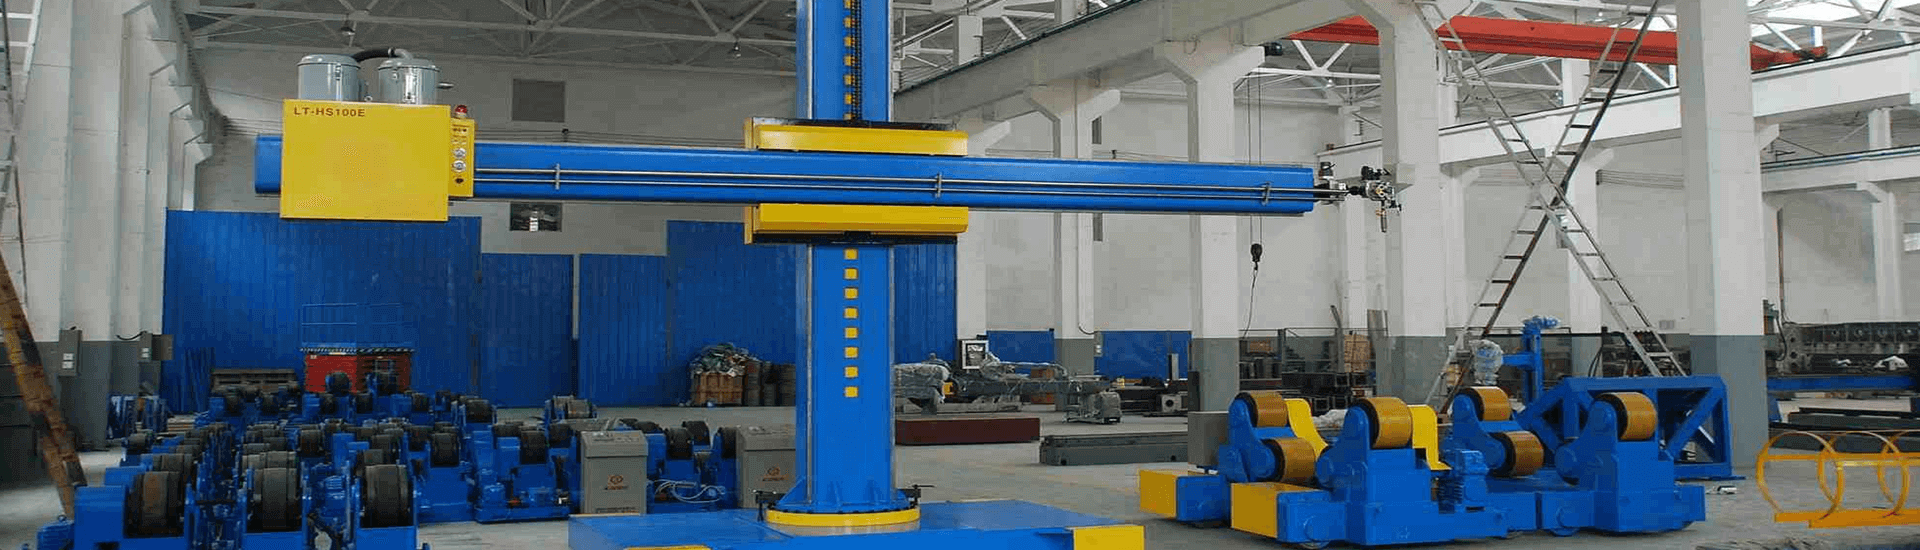 column-and-boom-manipulators-rotators-positioners